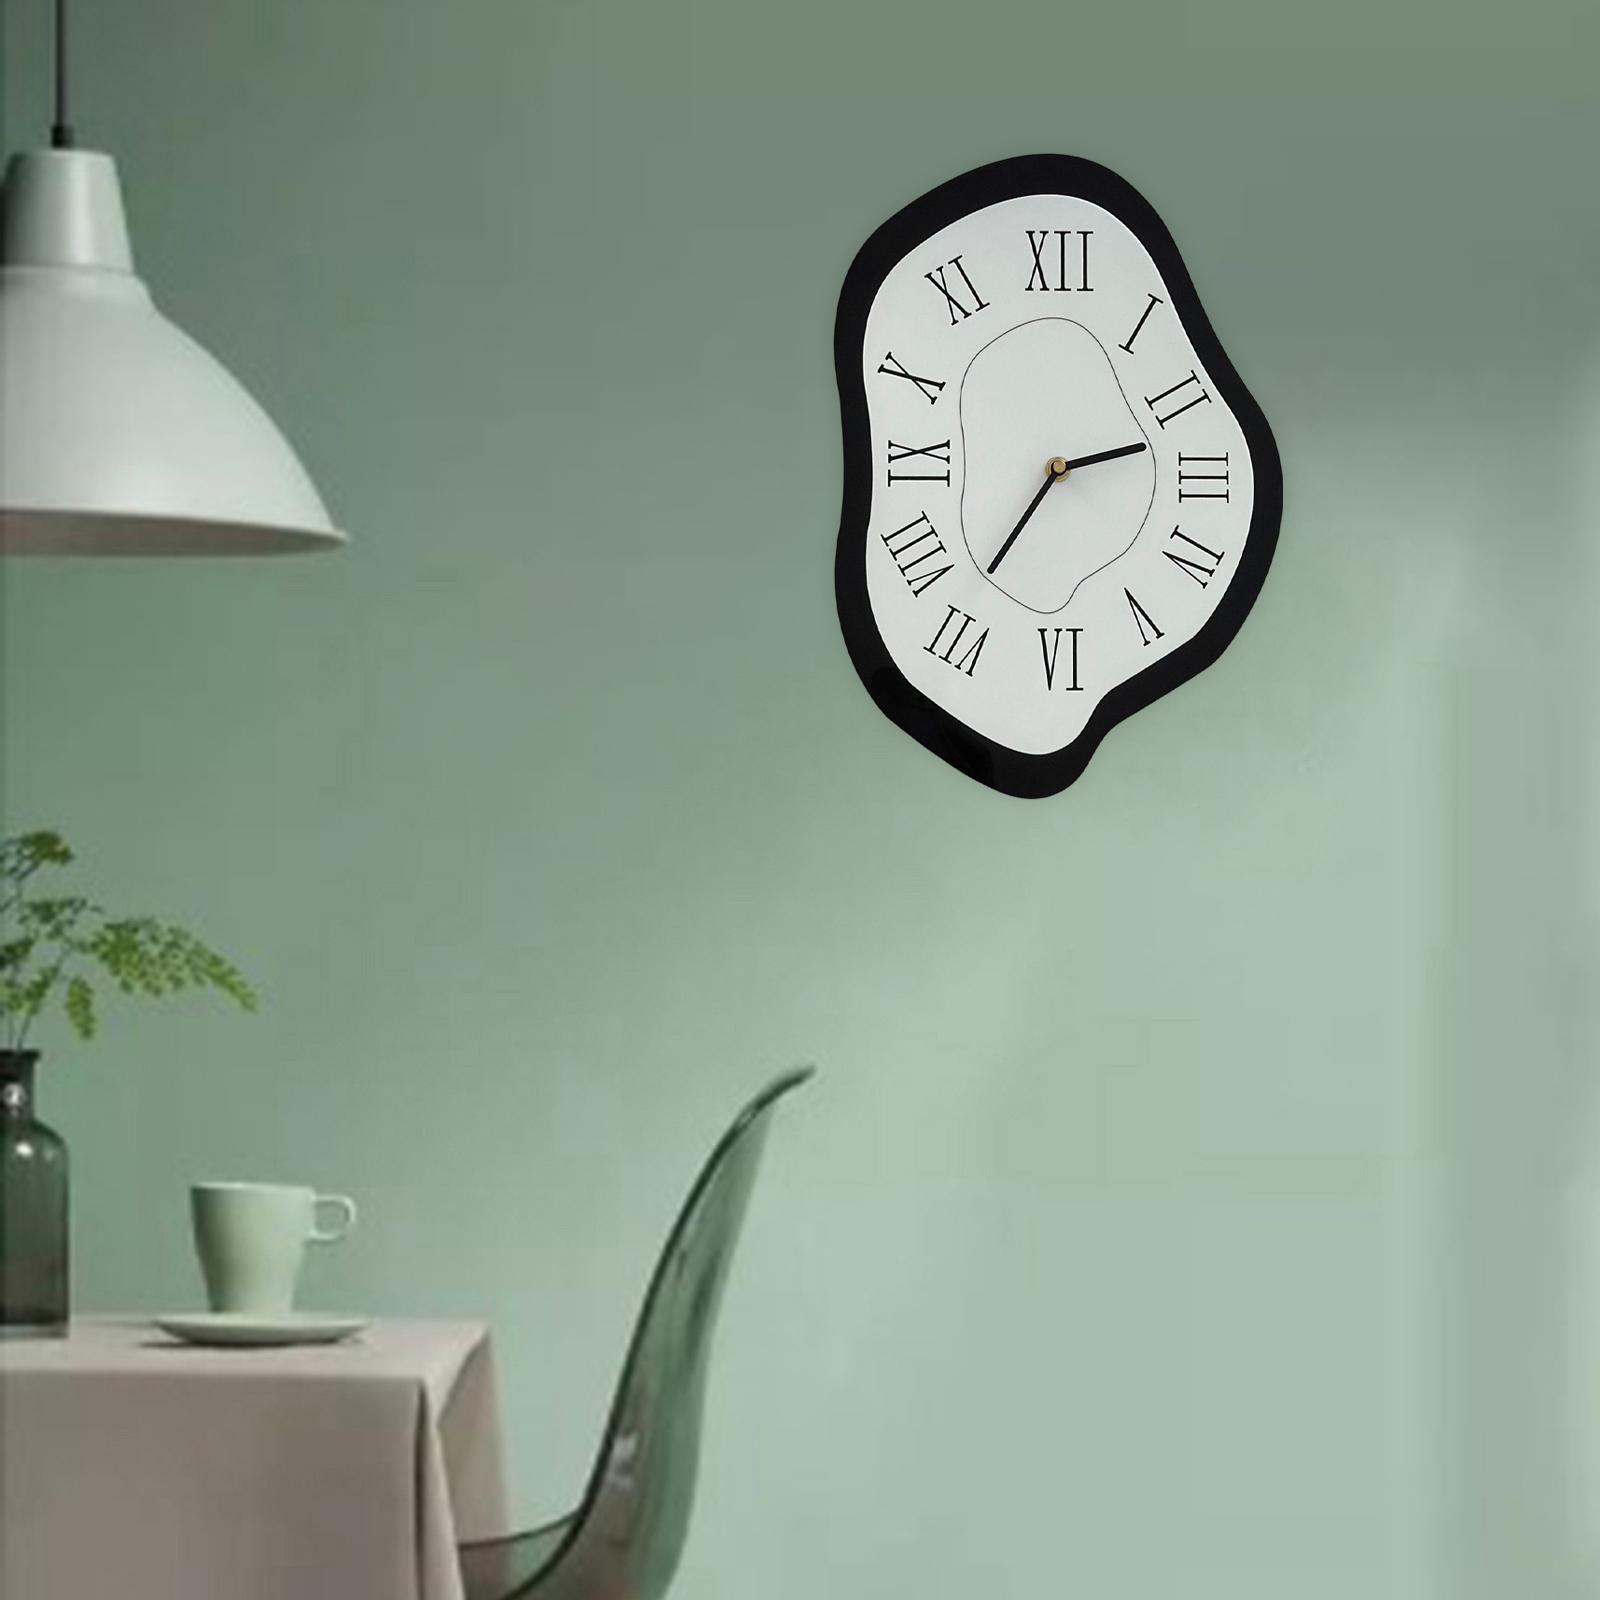 Decorative Large Clocks Acrylic Office Decorative Black